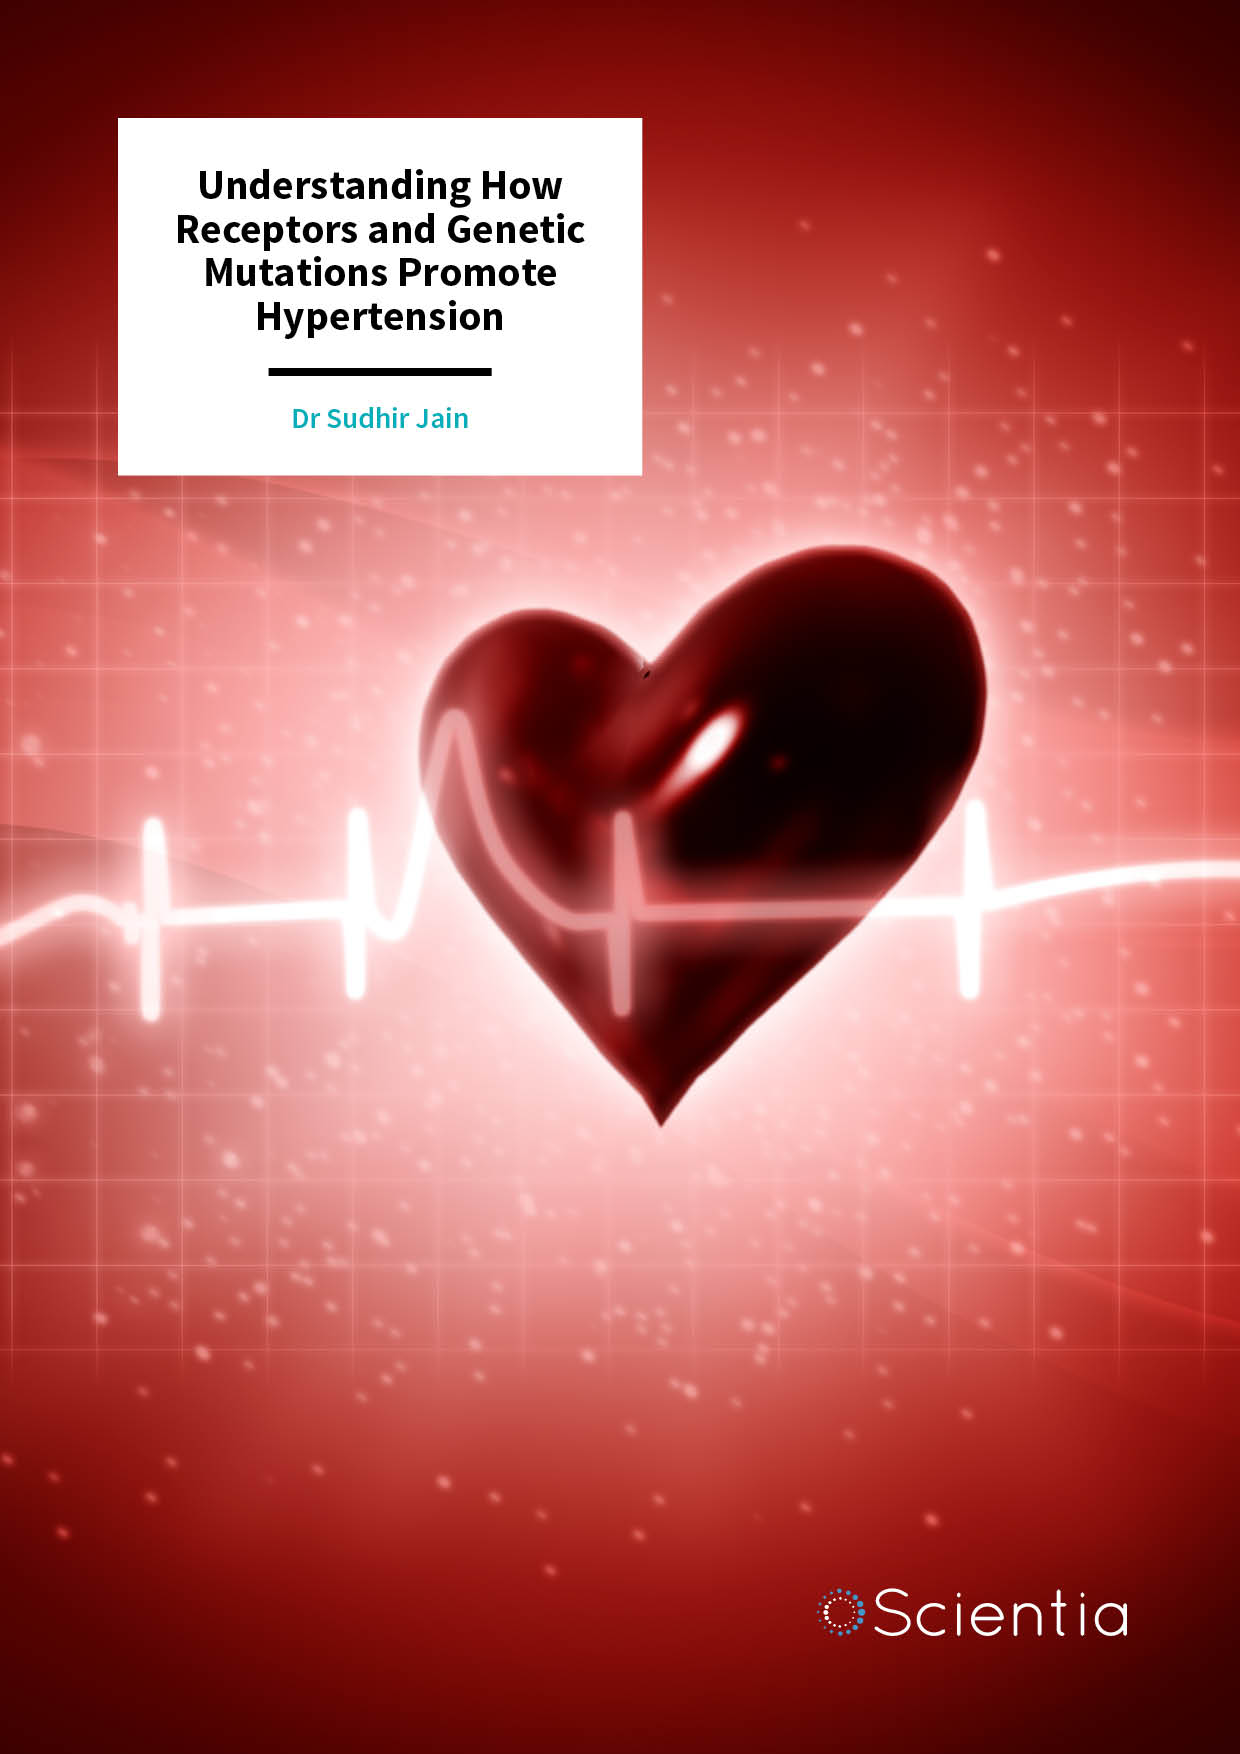 Dr Sudhir Jain | Understanding How Receptors and Genetic Mutations Promote Hypertension